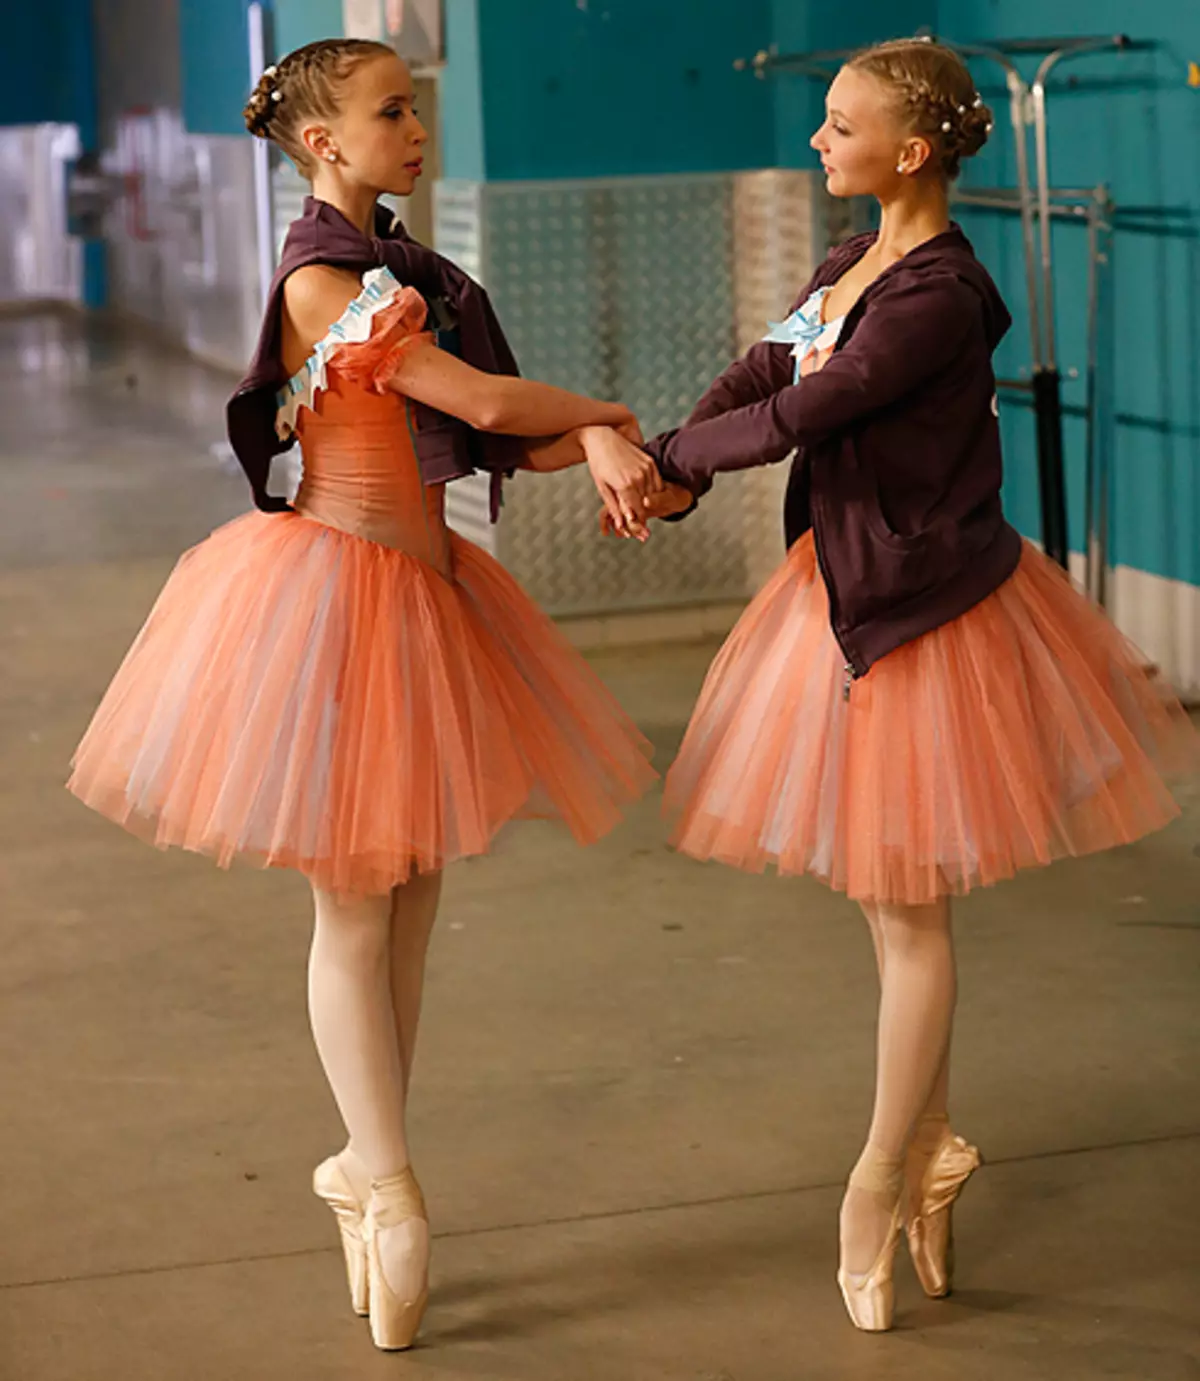 Daria Ustyuzhanin和Ksenia Andreenko - 俄羅斯芭蕾舞學院的學生命名為Vaganova